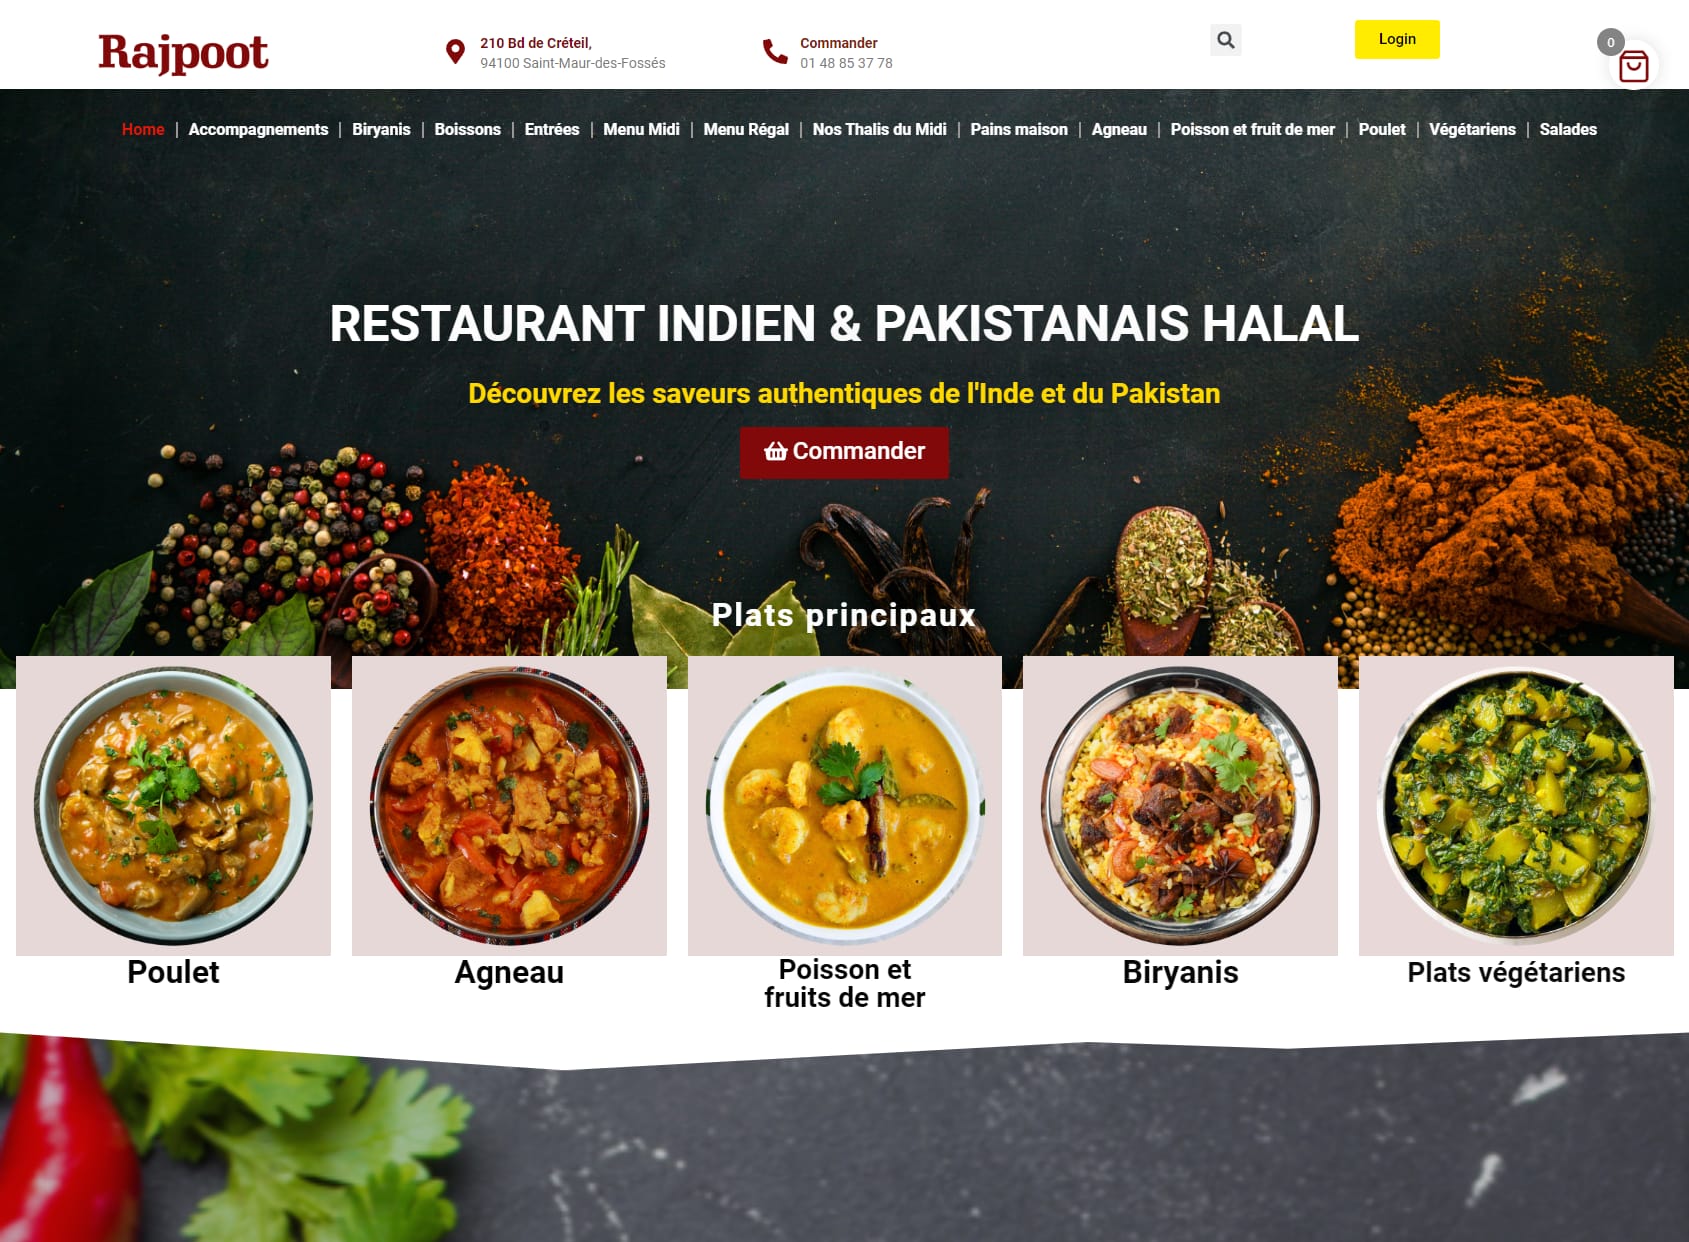 Rajpoot Saint-Maur - Restaurant Indien & Pakistanais Halal